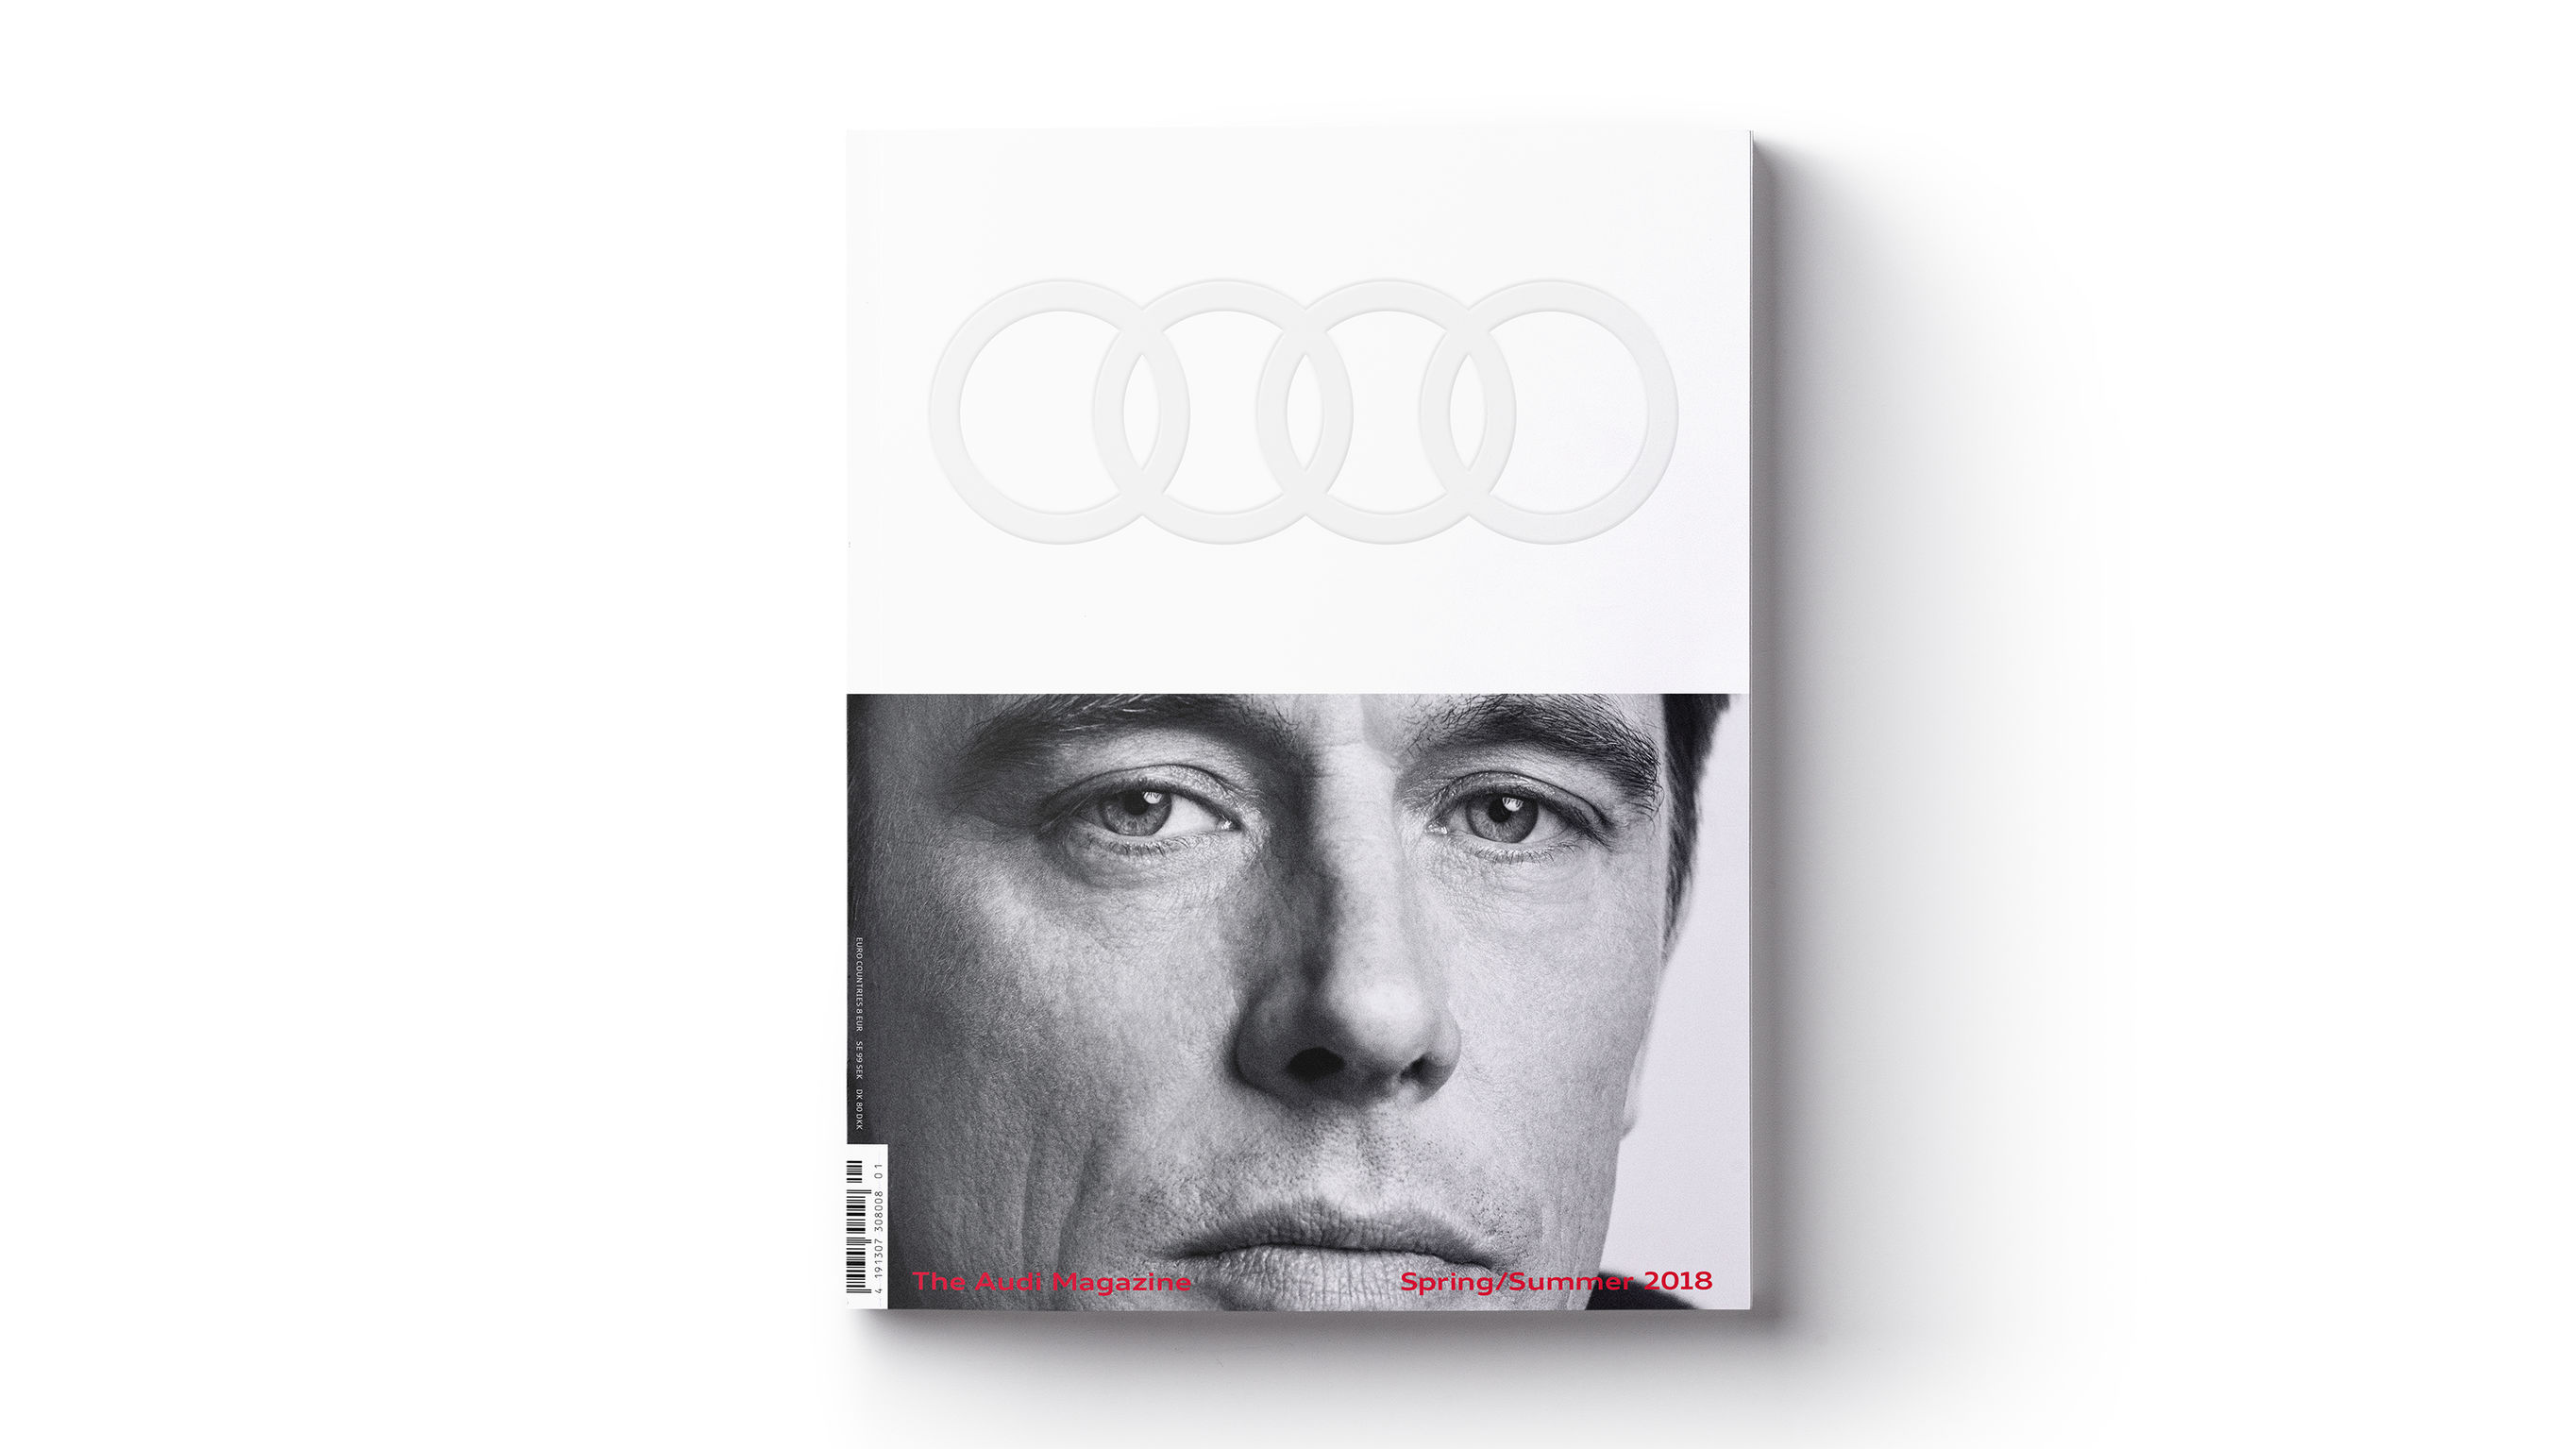 The Audi Magazine Spring/Summer 2018